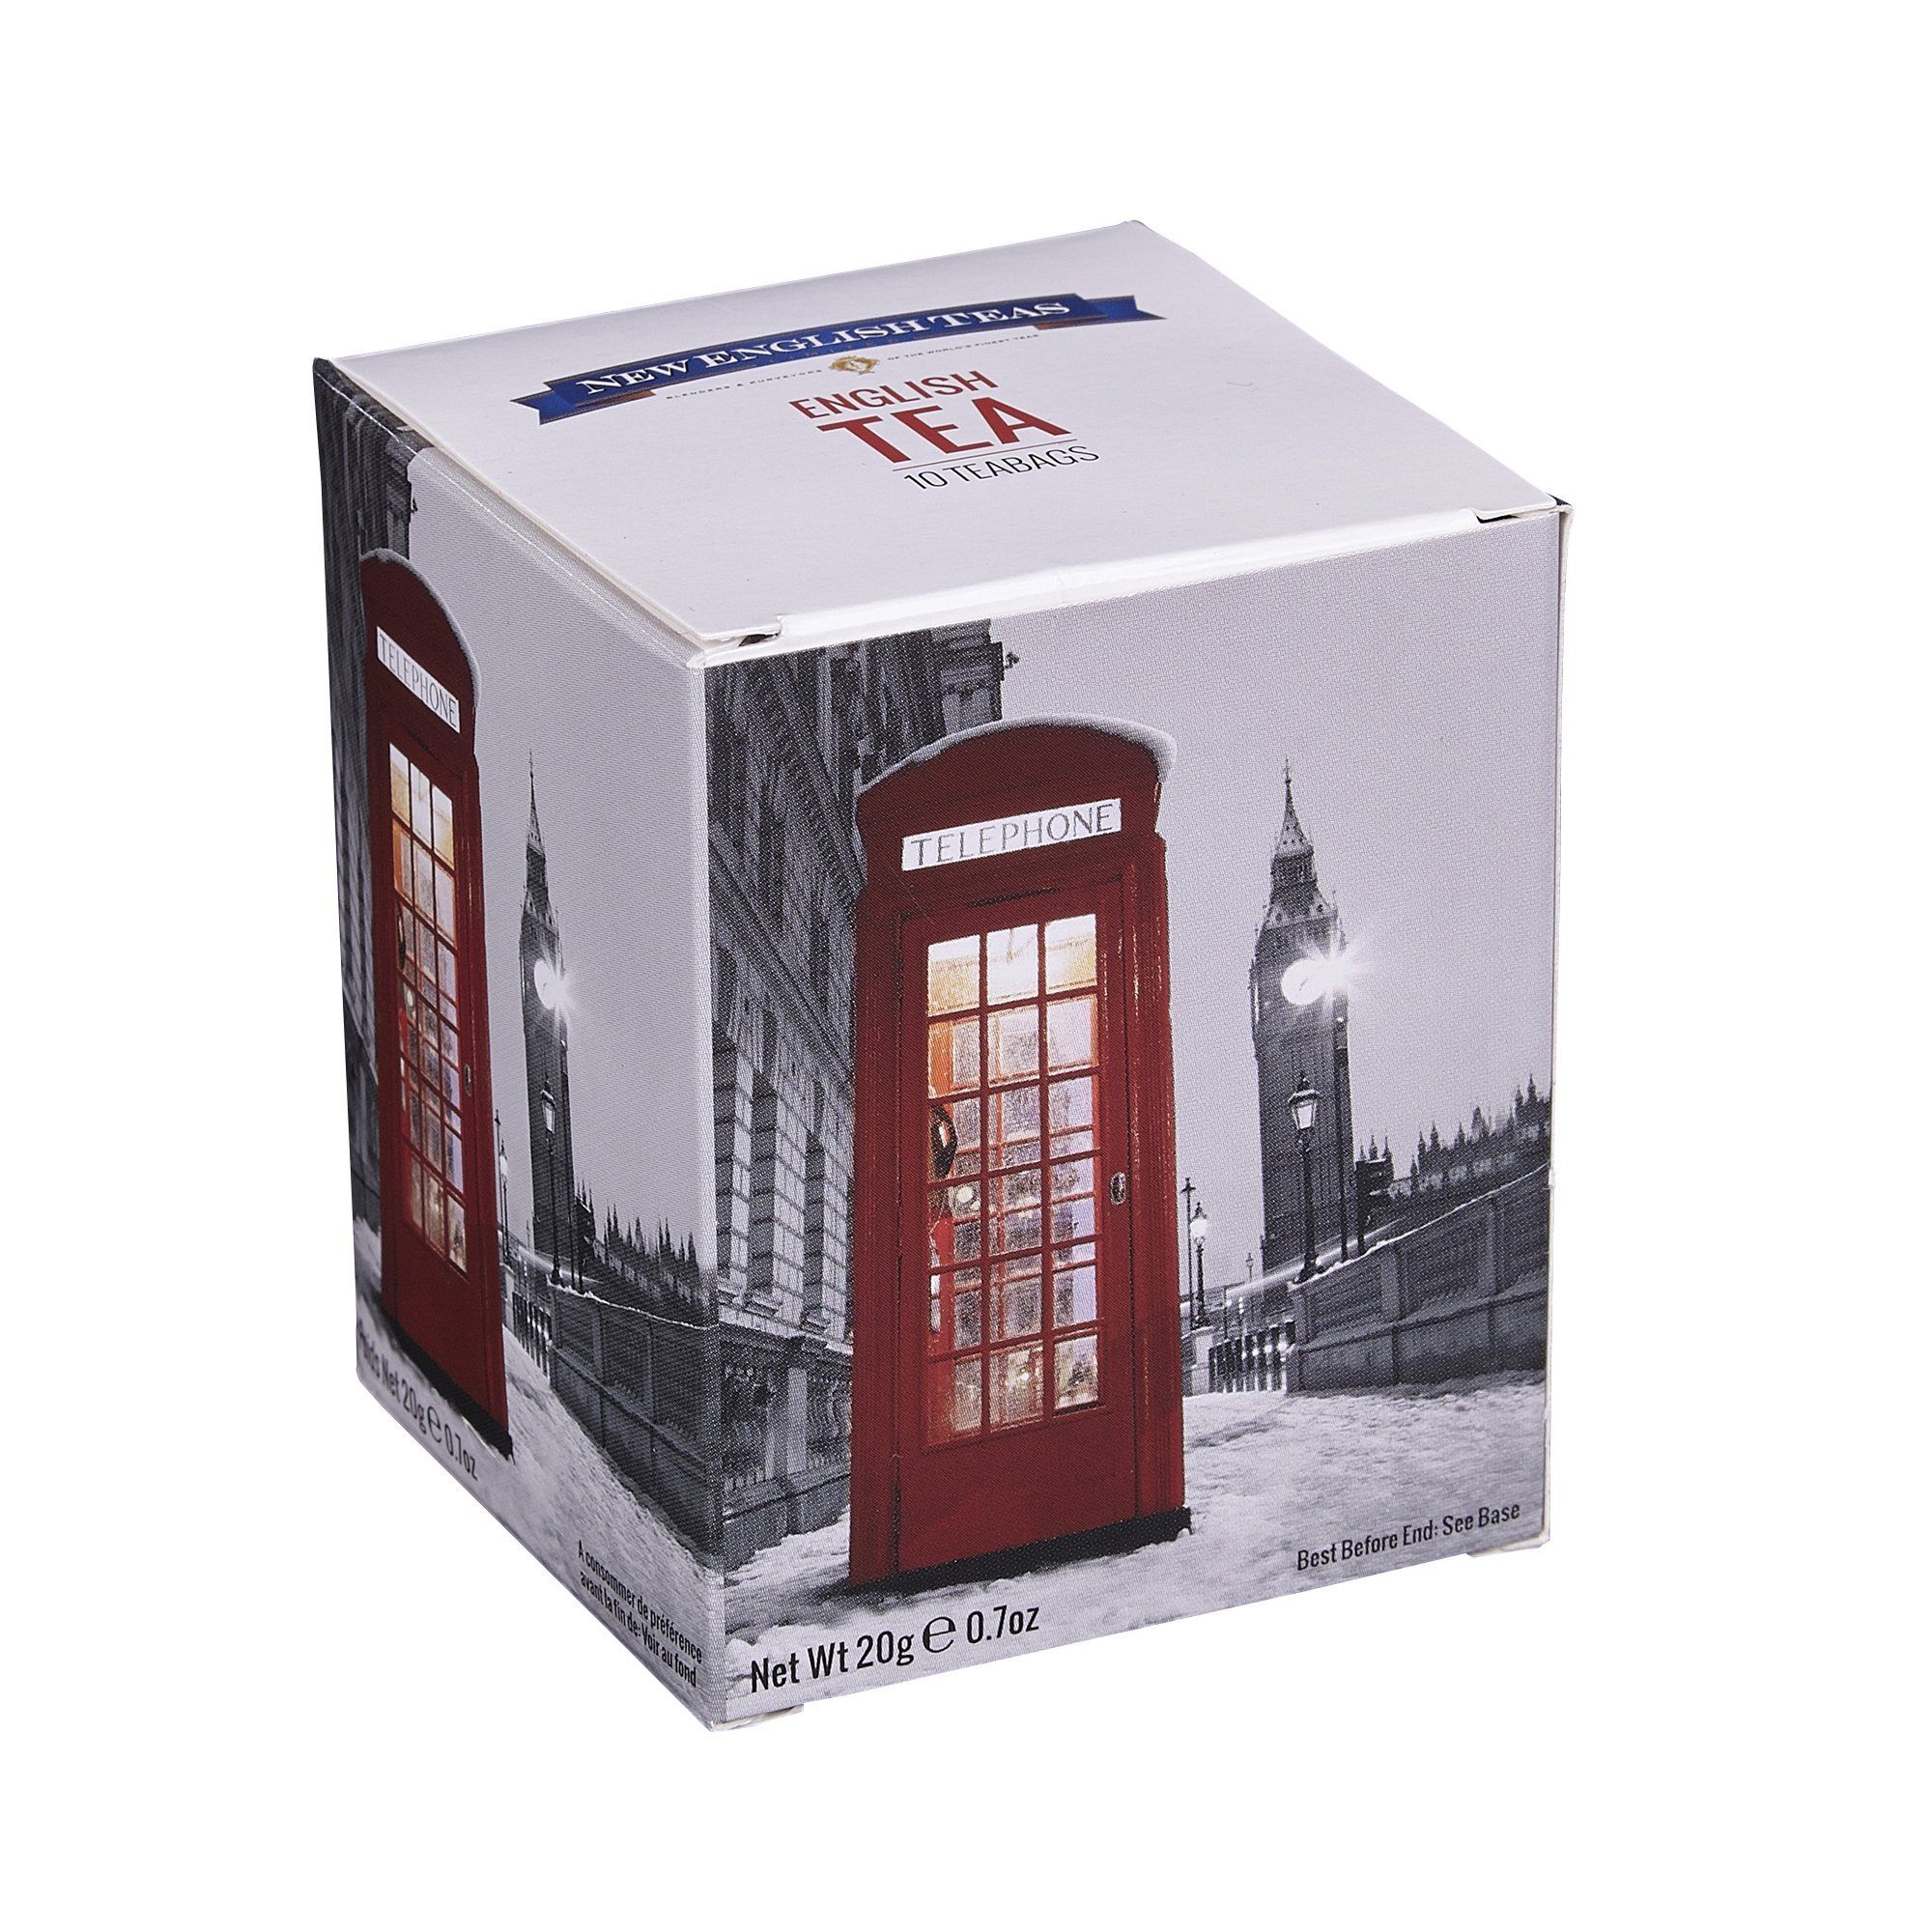 English Telephone Box Snow Scene Breakfast Tea 10 Teabag Carton Black Tea New English Teas 